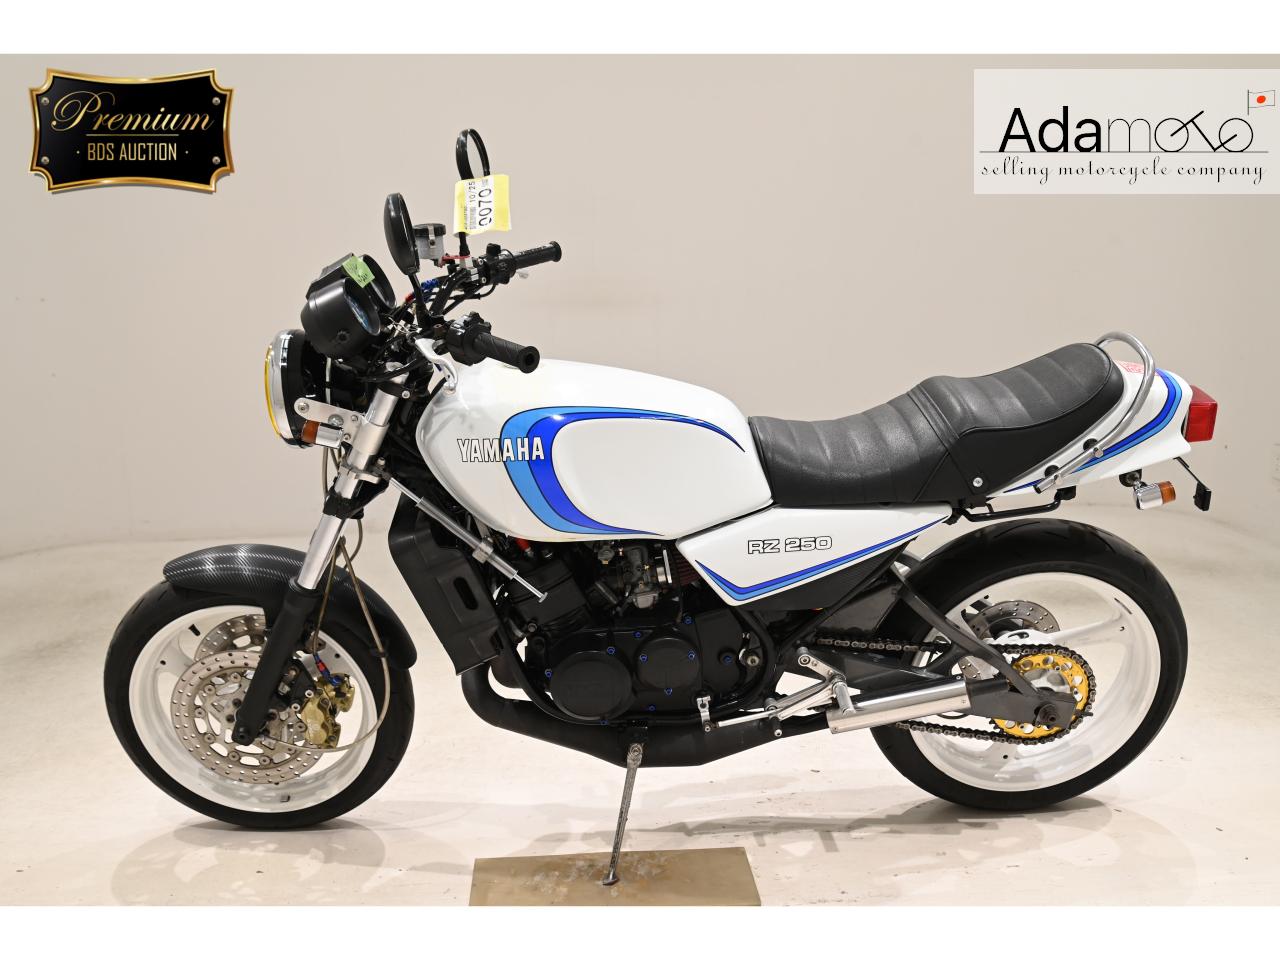 Yamaha RZ250 - Adamoto - Motorcycles from Japan